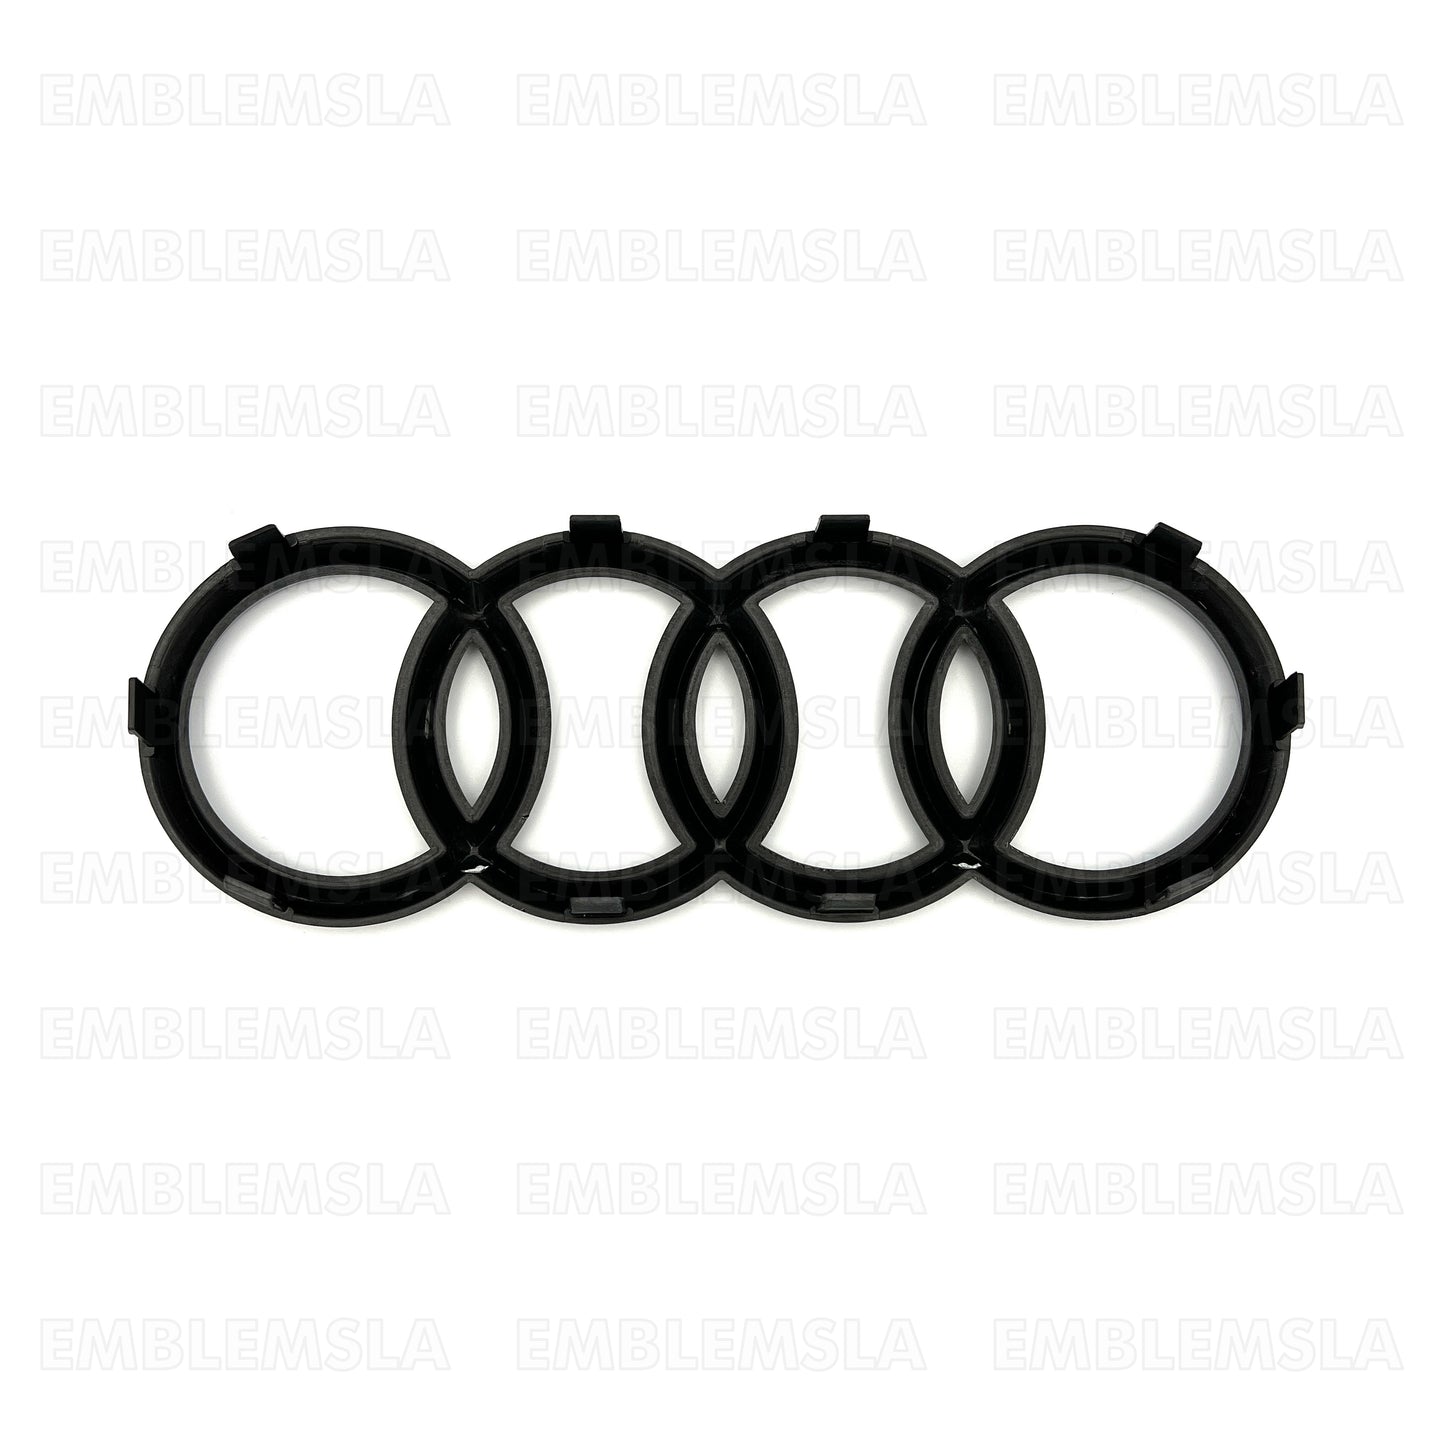 Audi Rings Front Grill Gloss Black Emblem Badge Q5 SQ5 Q3 Q7 A6 A7 285mm